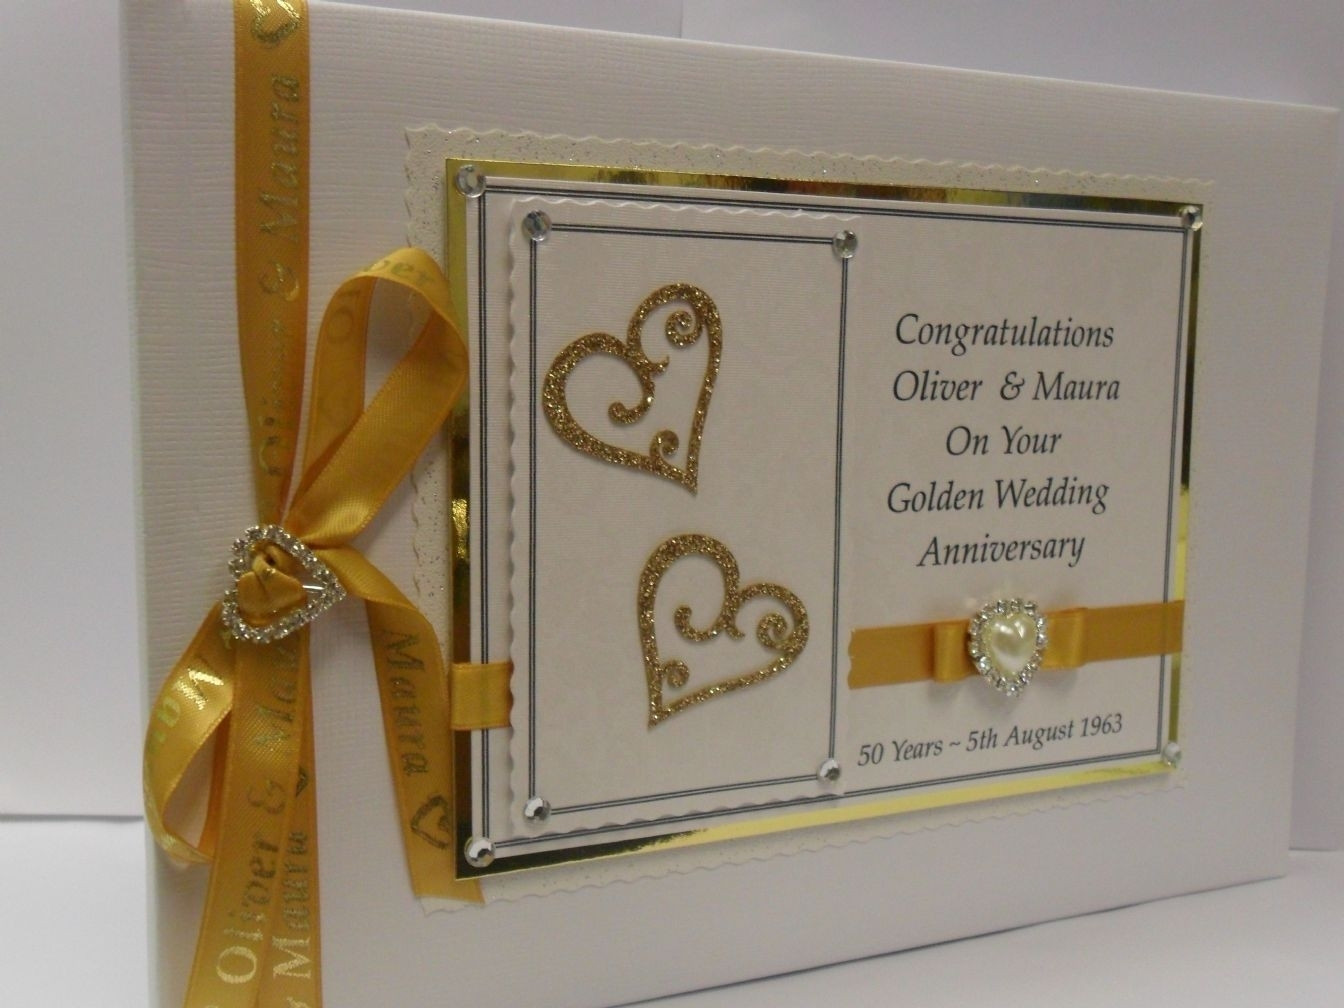 Best ideas about Golden Anniversary Gift Ideas
. Save or Pin 50th Wedding Anniversary Gift Ideas — Wedding Academy Creative Now.